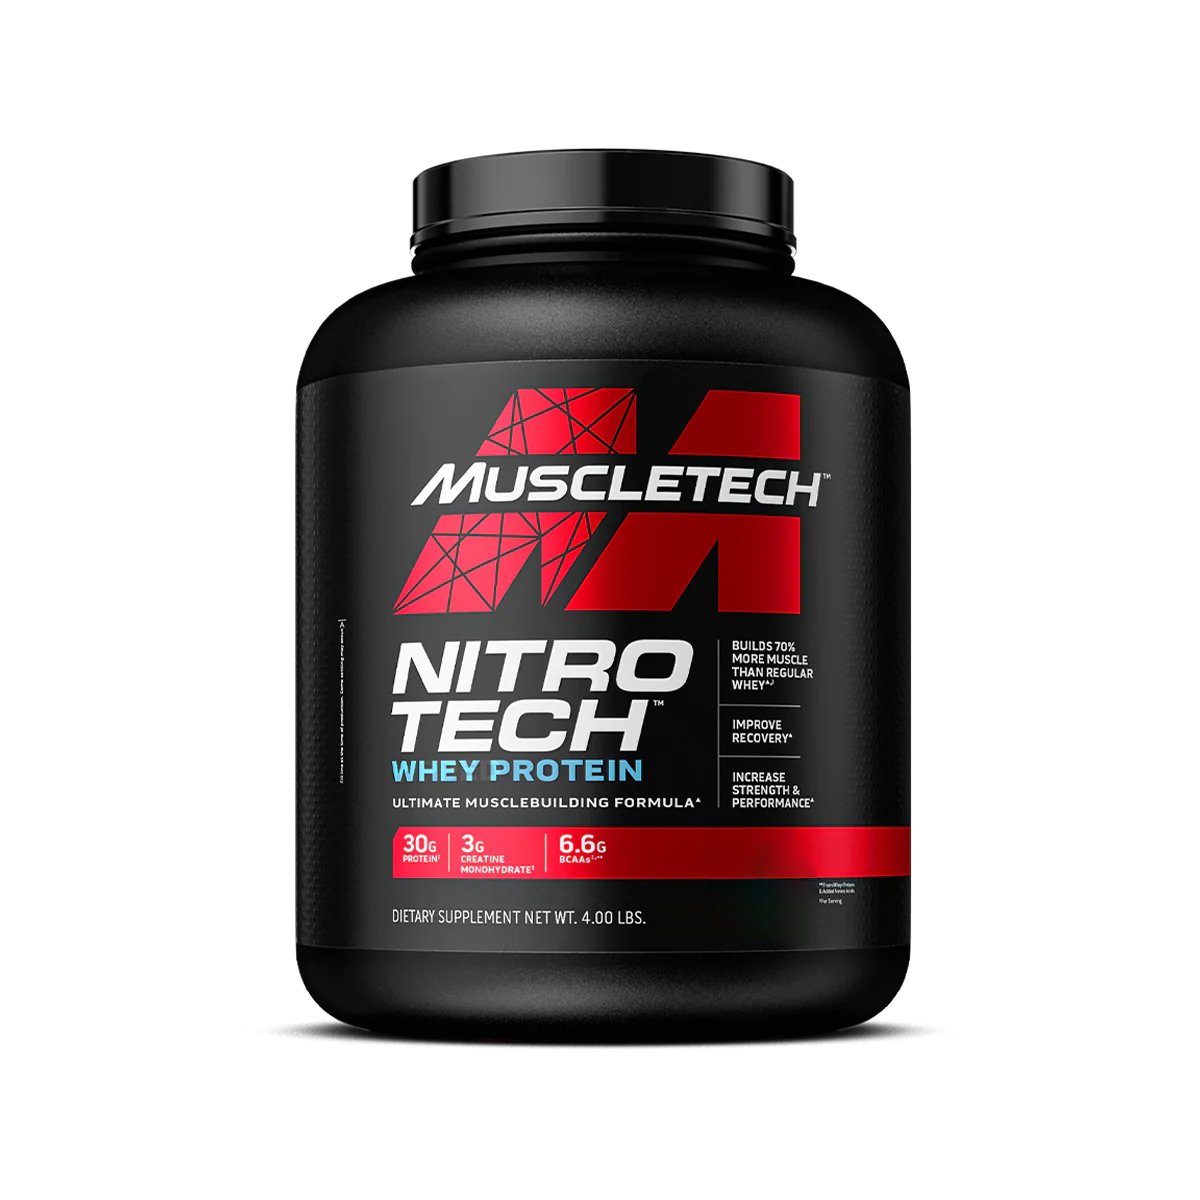 Протеин Muscletech Nitro Tech Whey Protein, 1.81 кг Печенье-крем,  ml, MuscleTech. Protein. Mass Gain recovery Anti-catabolic properties 